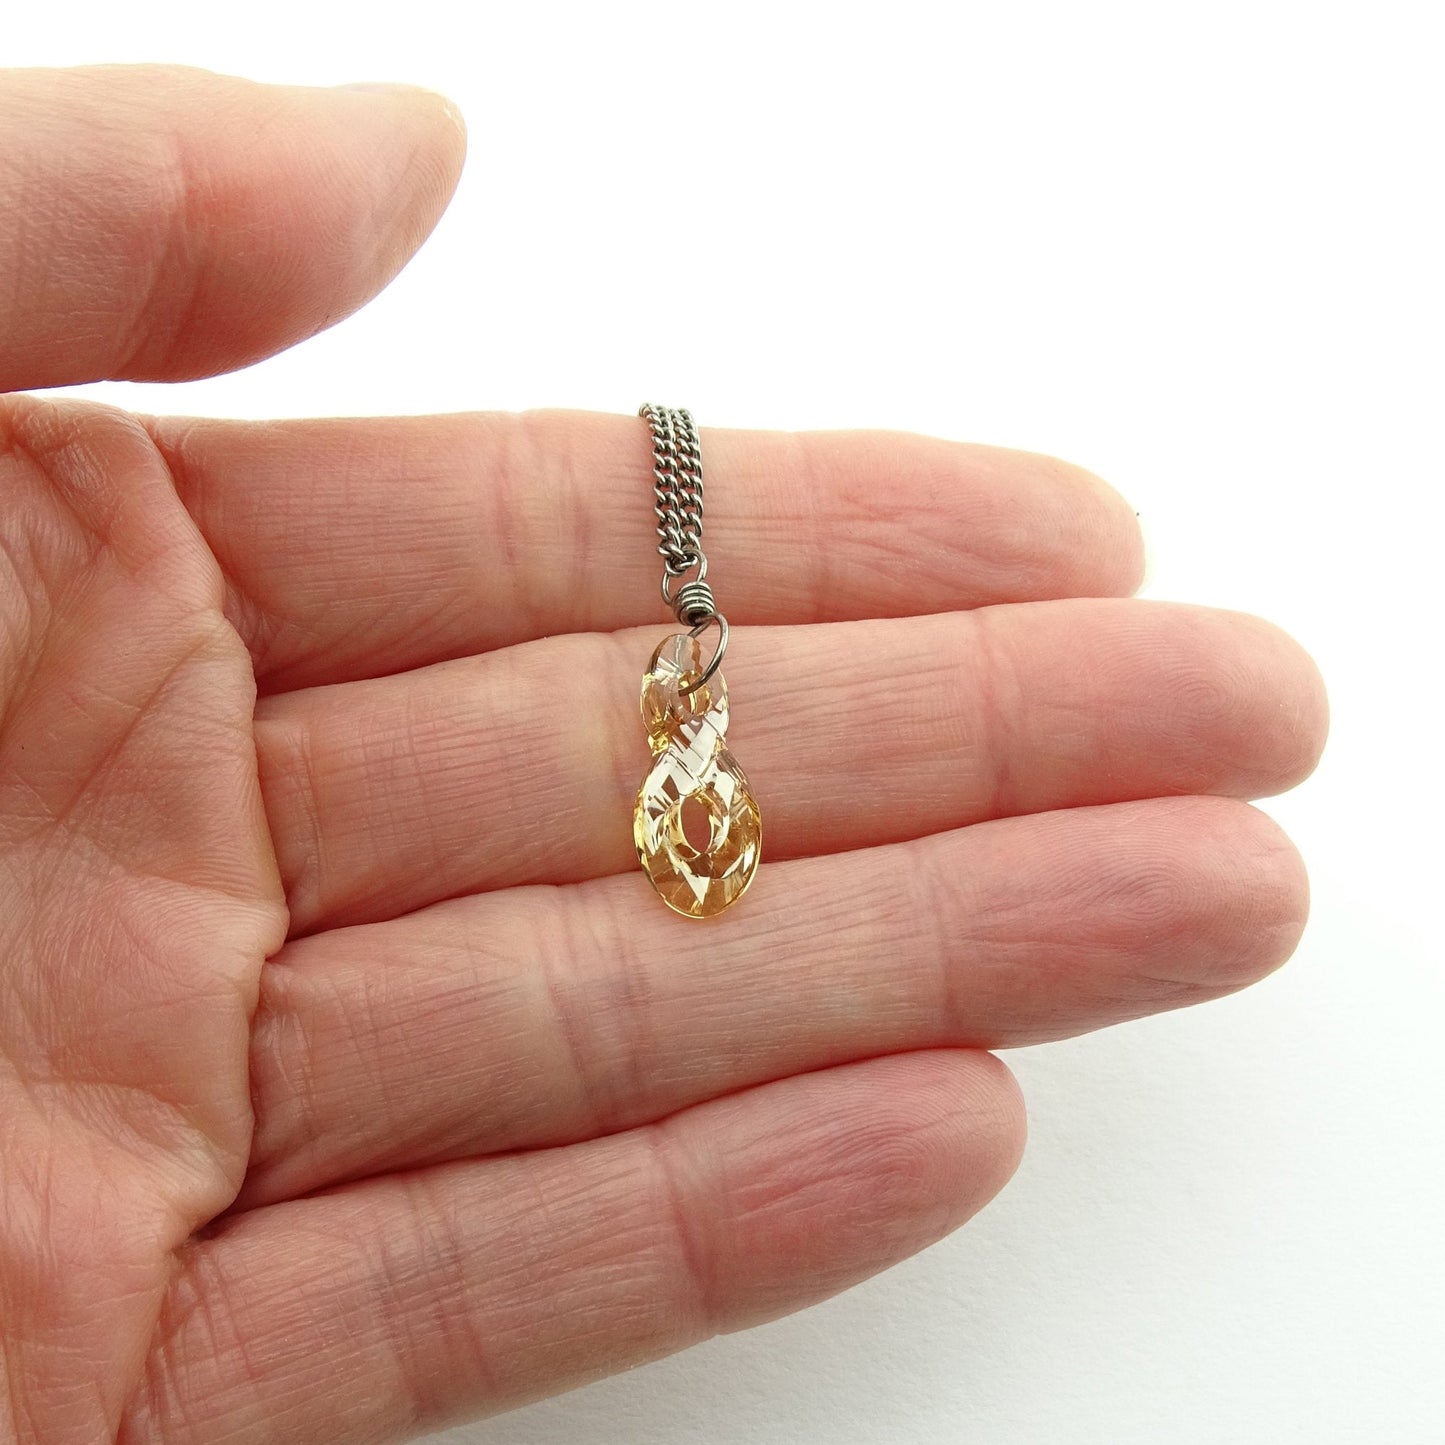 Golden Shadow Infinity Symbol Titanium Necklace, Eternity Swarovski Crystal, Nickel Free Hypoallergenic Niobium Necklace for Sensitive Skin